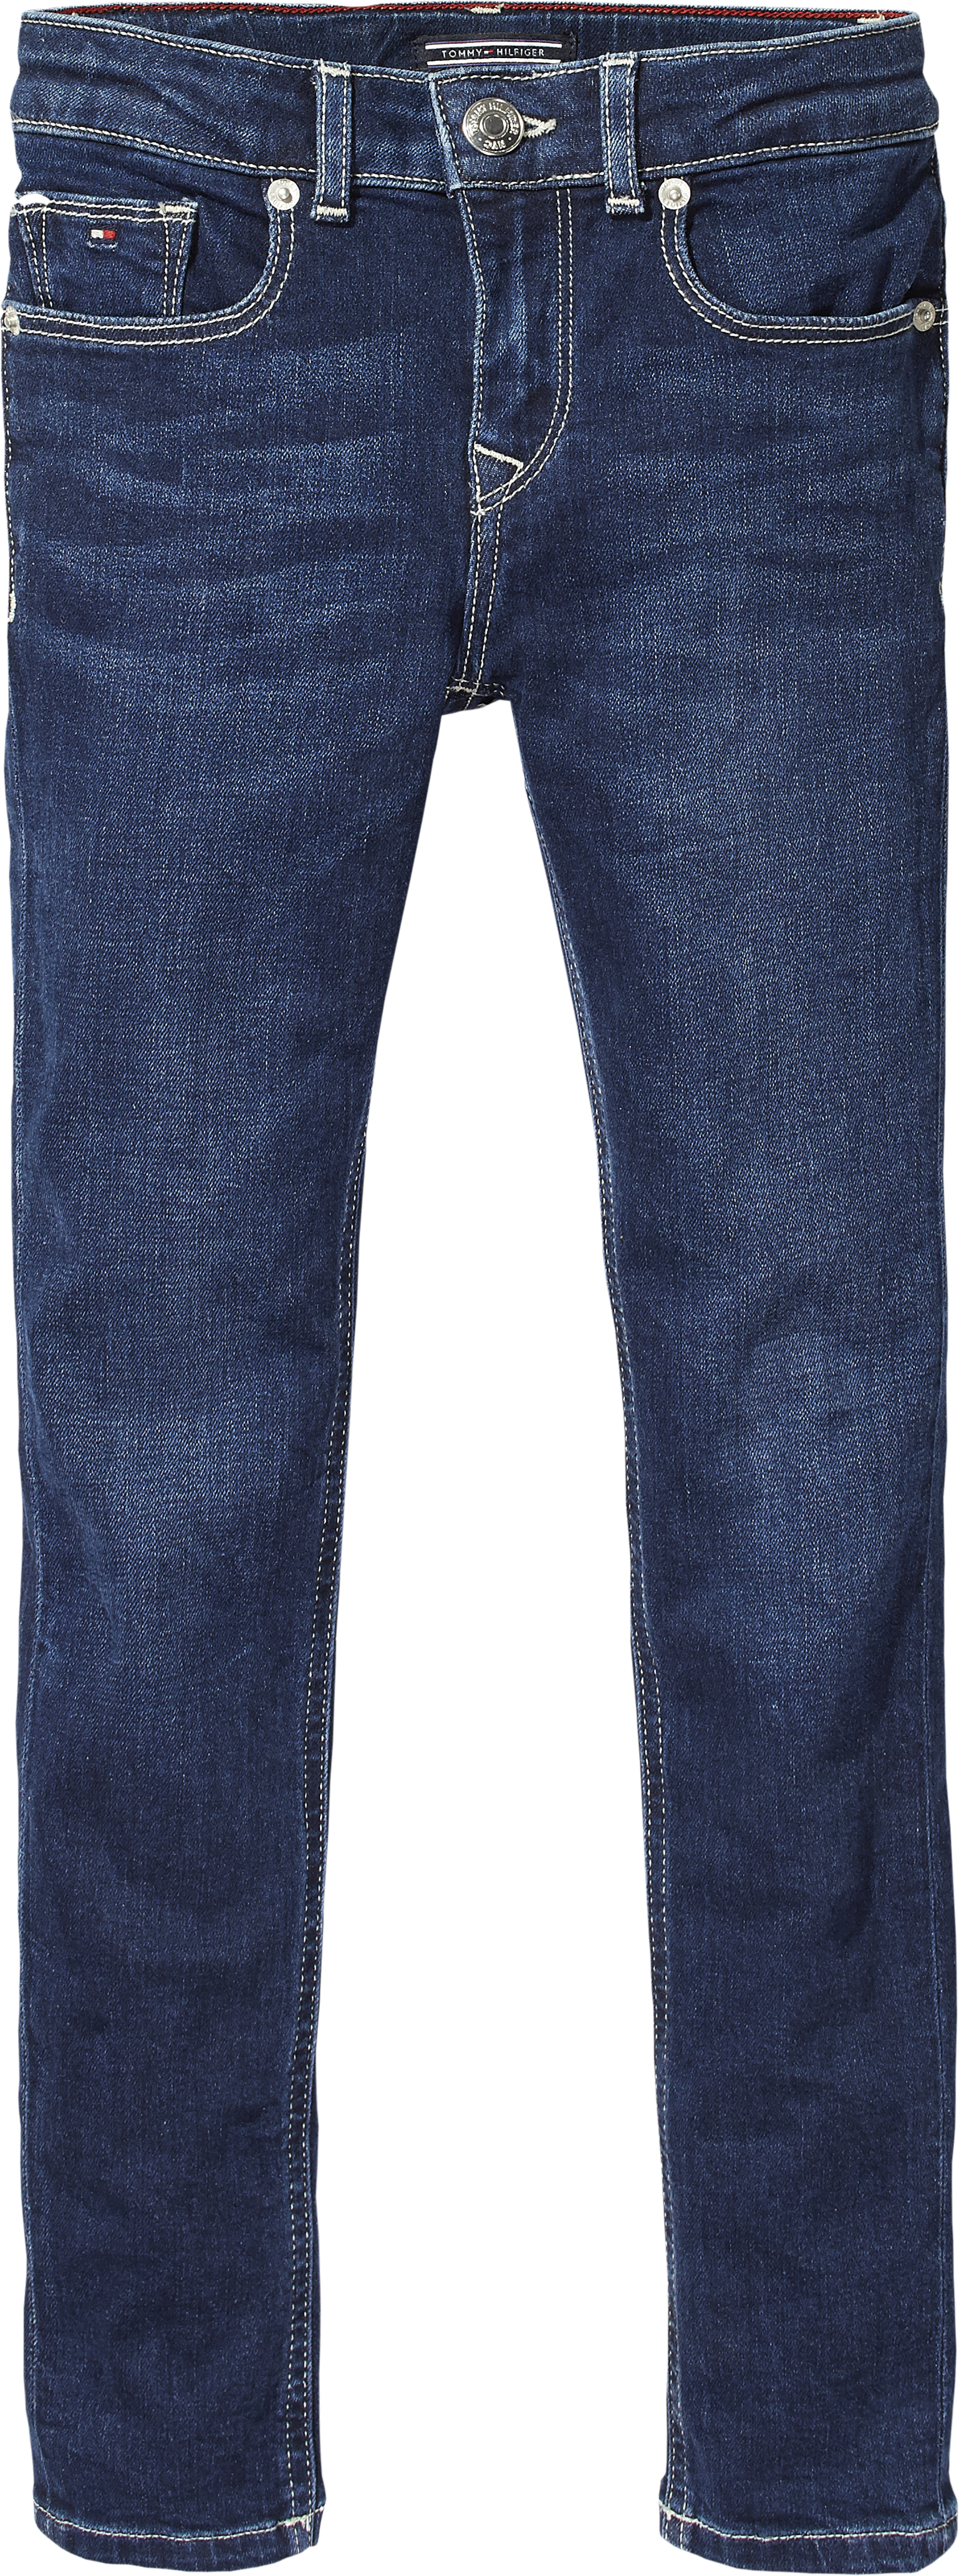 Nora Skinny Jeans, Mørkeblå, 110 cm